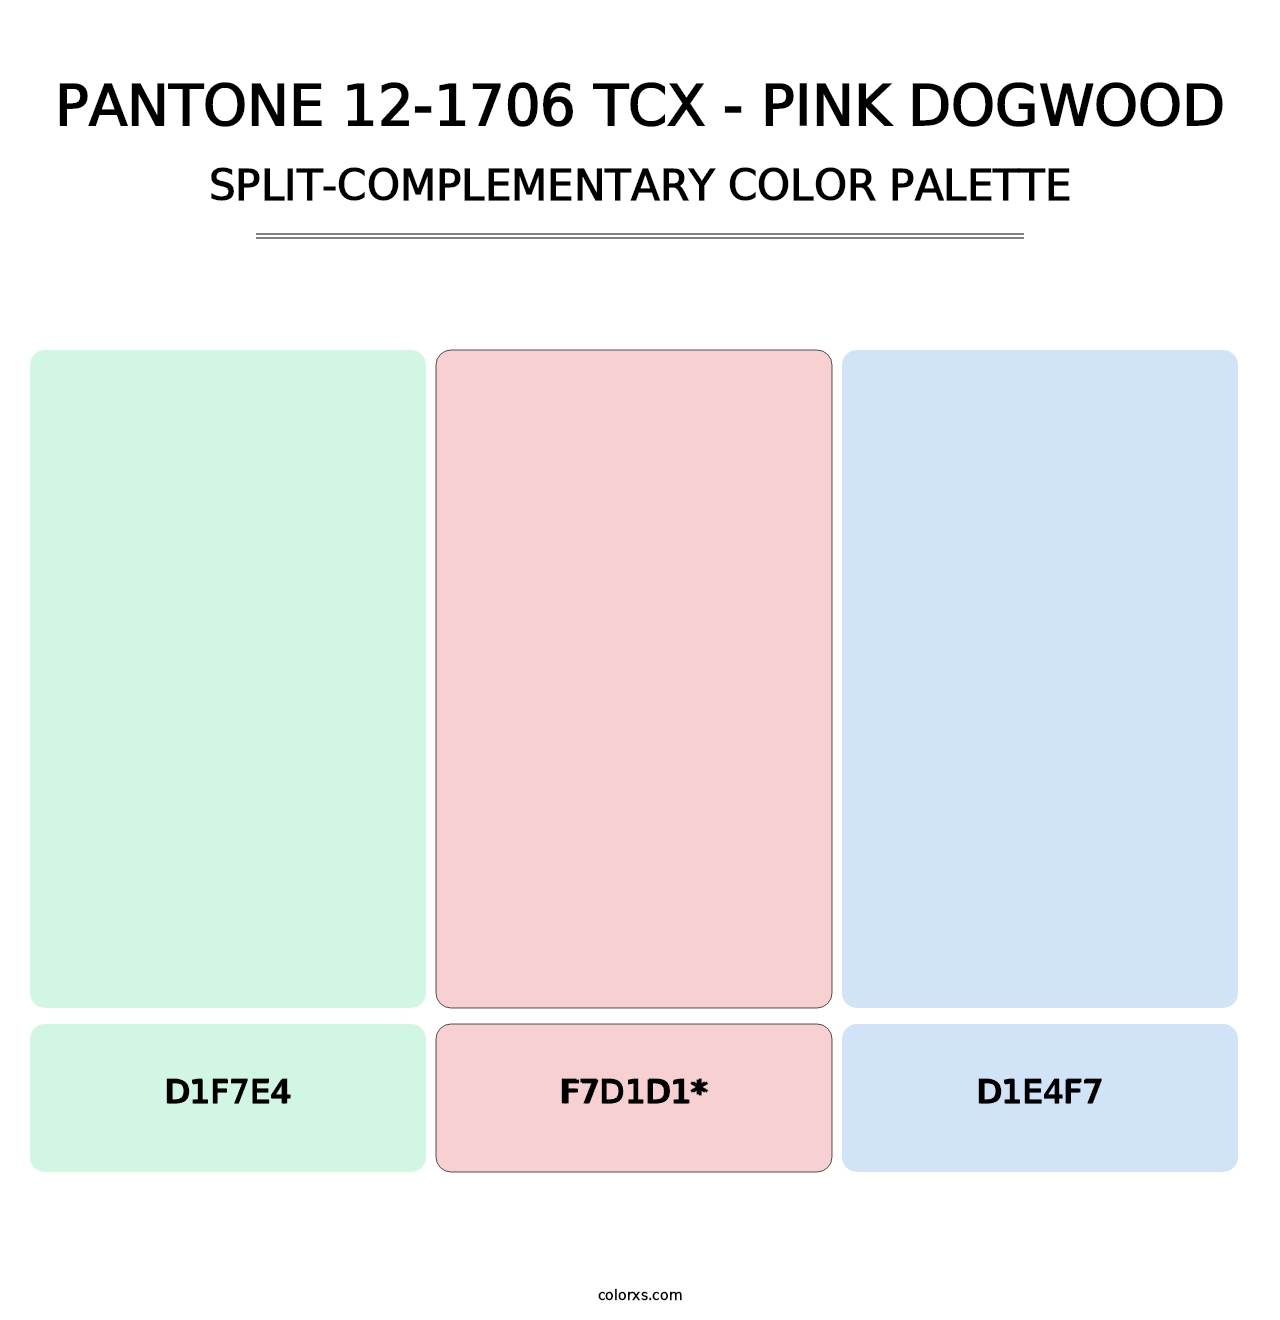 PANTONE 12-1706 TCX - Pink Dogwood - Split-Complementary Color Palette